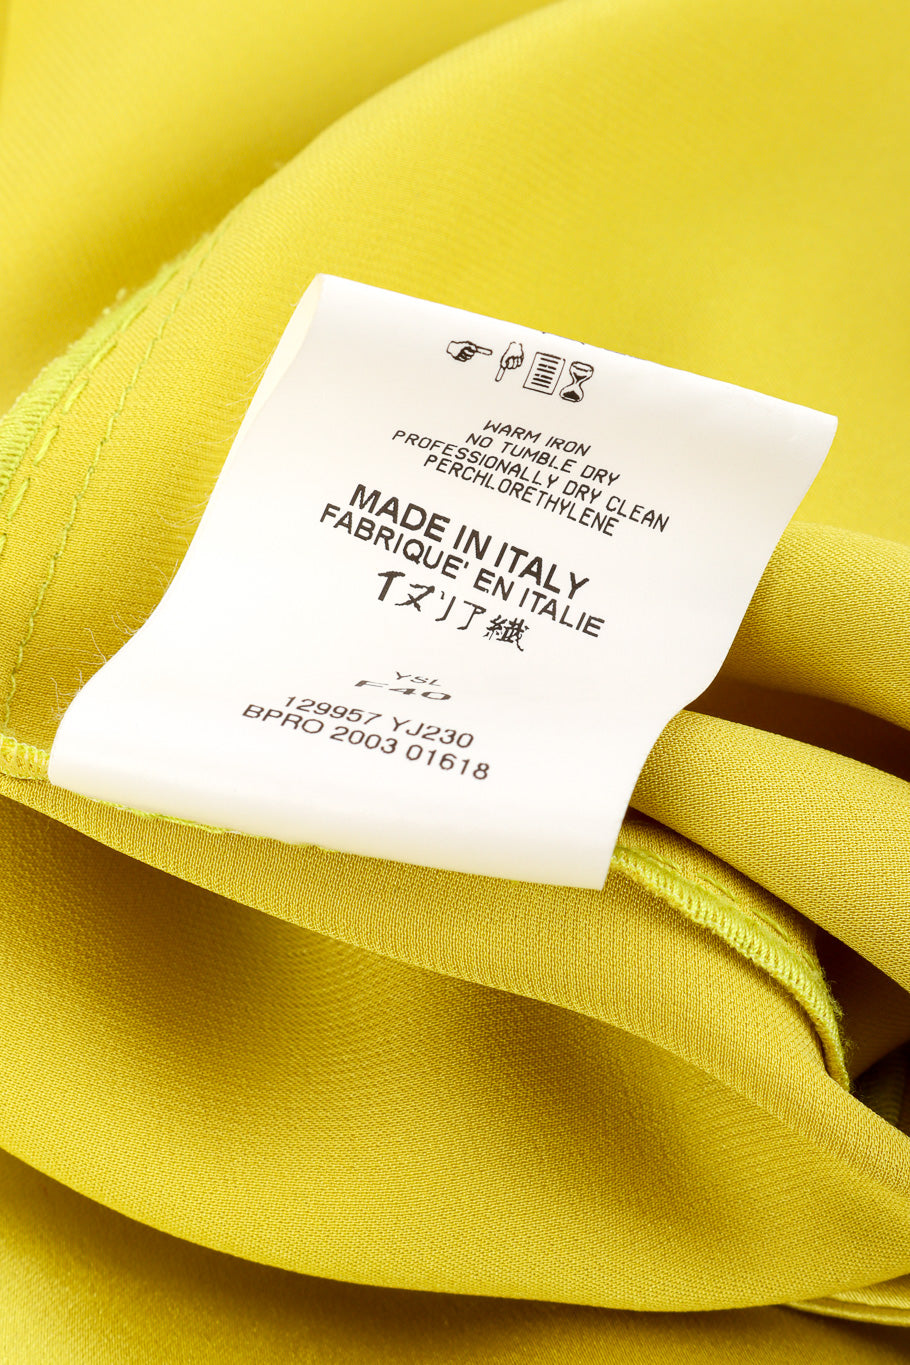 Ruffle hem skirt by Yves Saint Laurent fabric tag back  @recessla